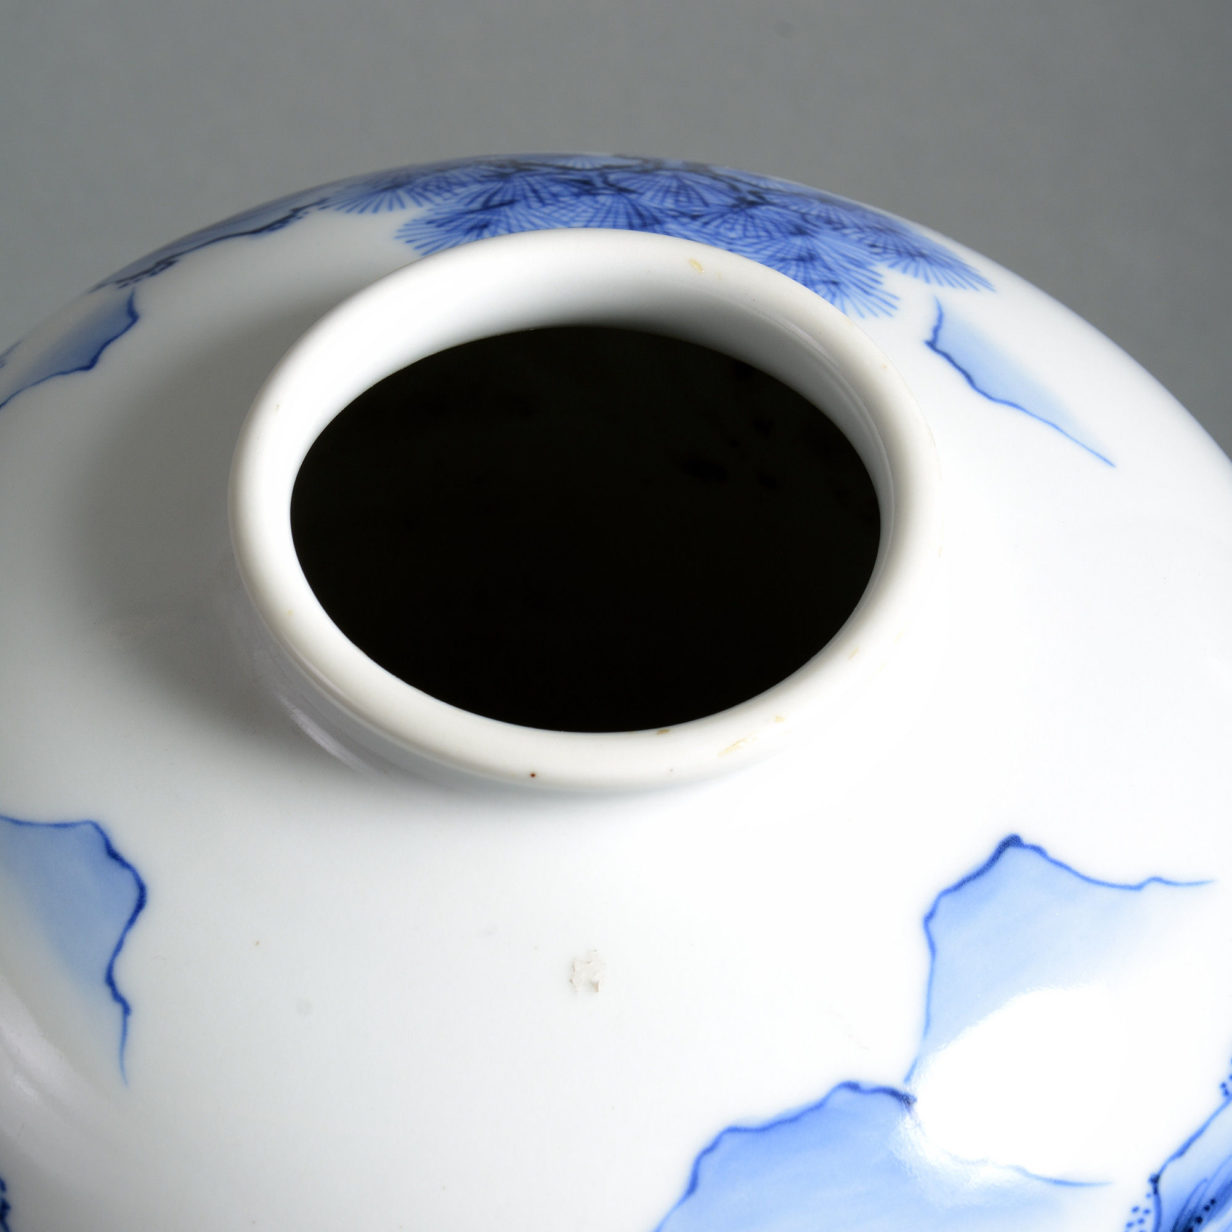 A 19th century blue & white porcelain vase